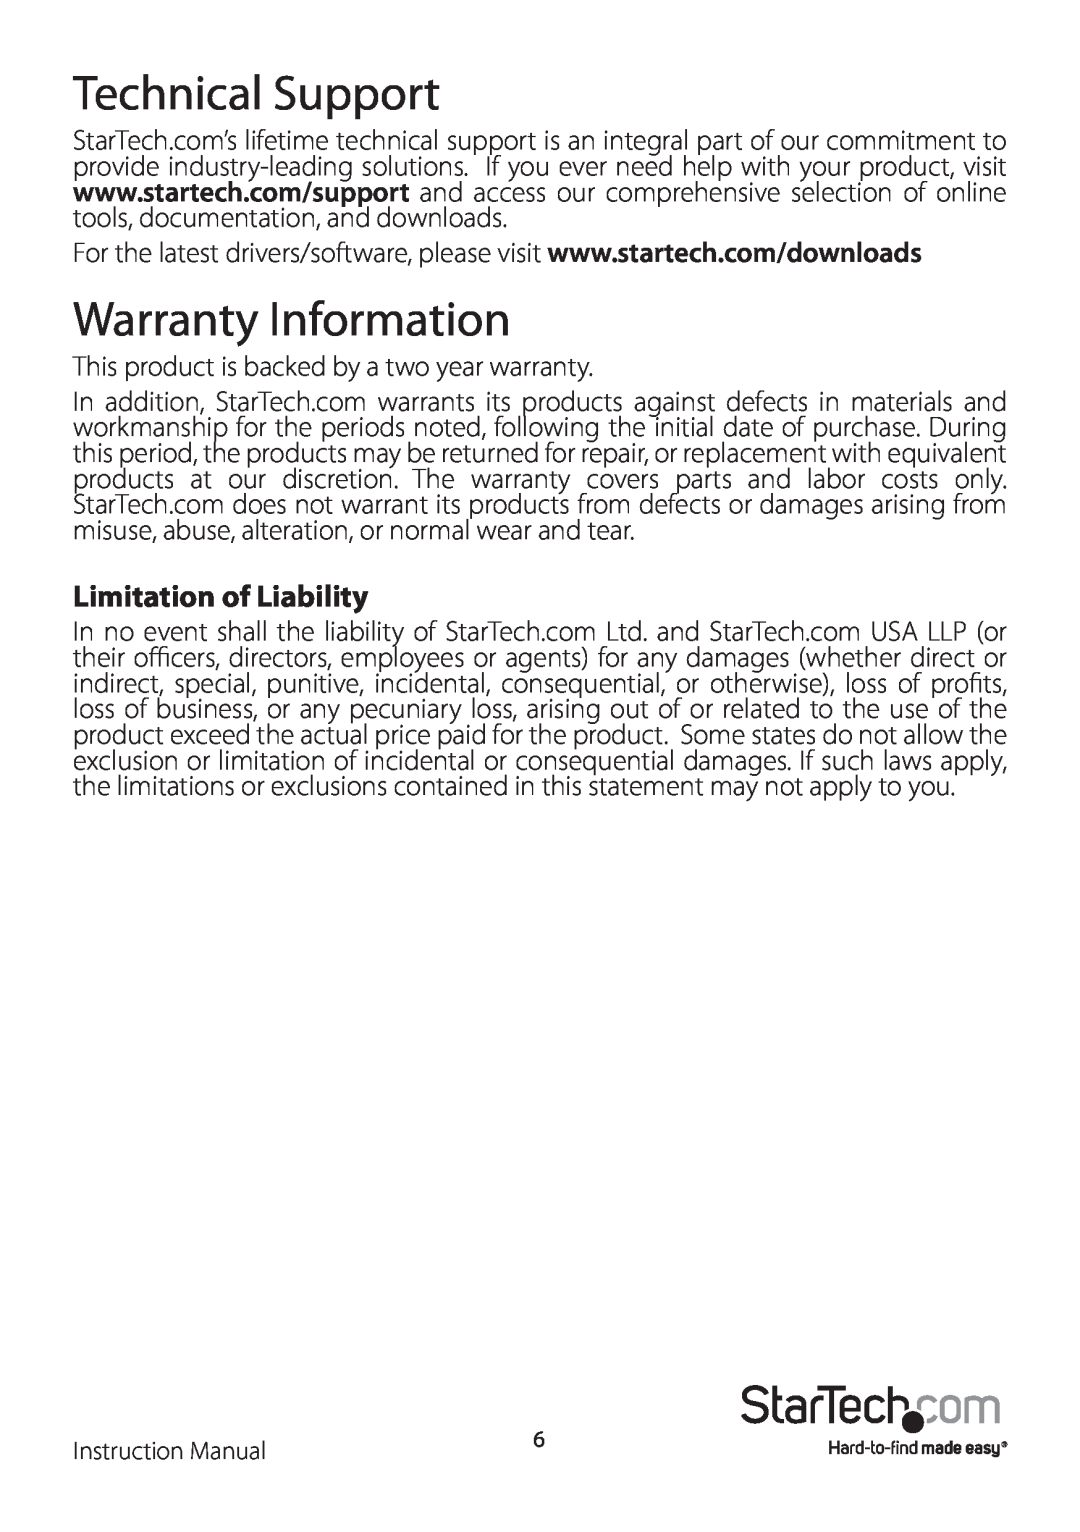 StarTech.com HD2VID manual Technical Support, Warranty Information, Limitation of Liability 